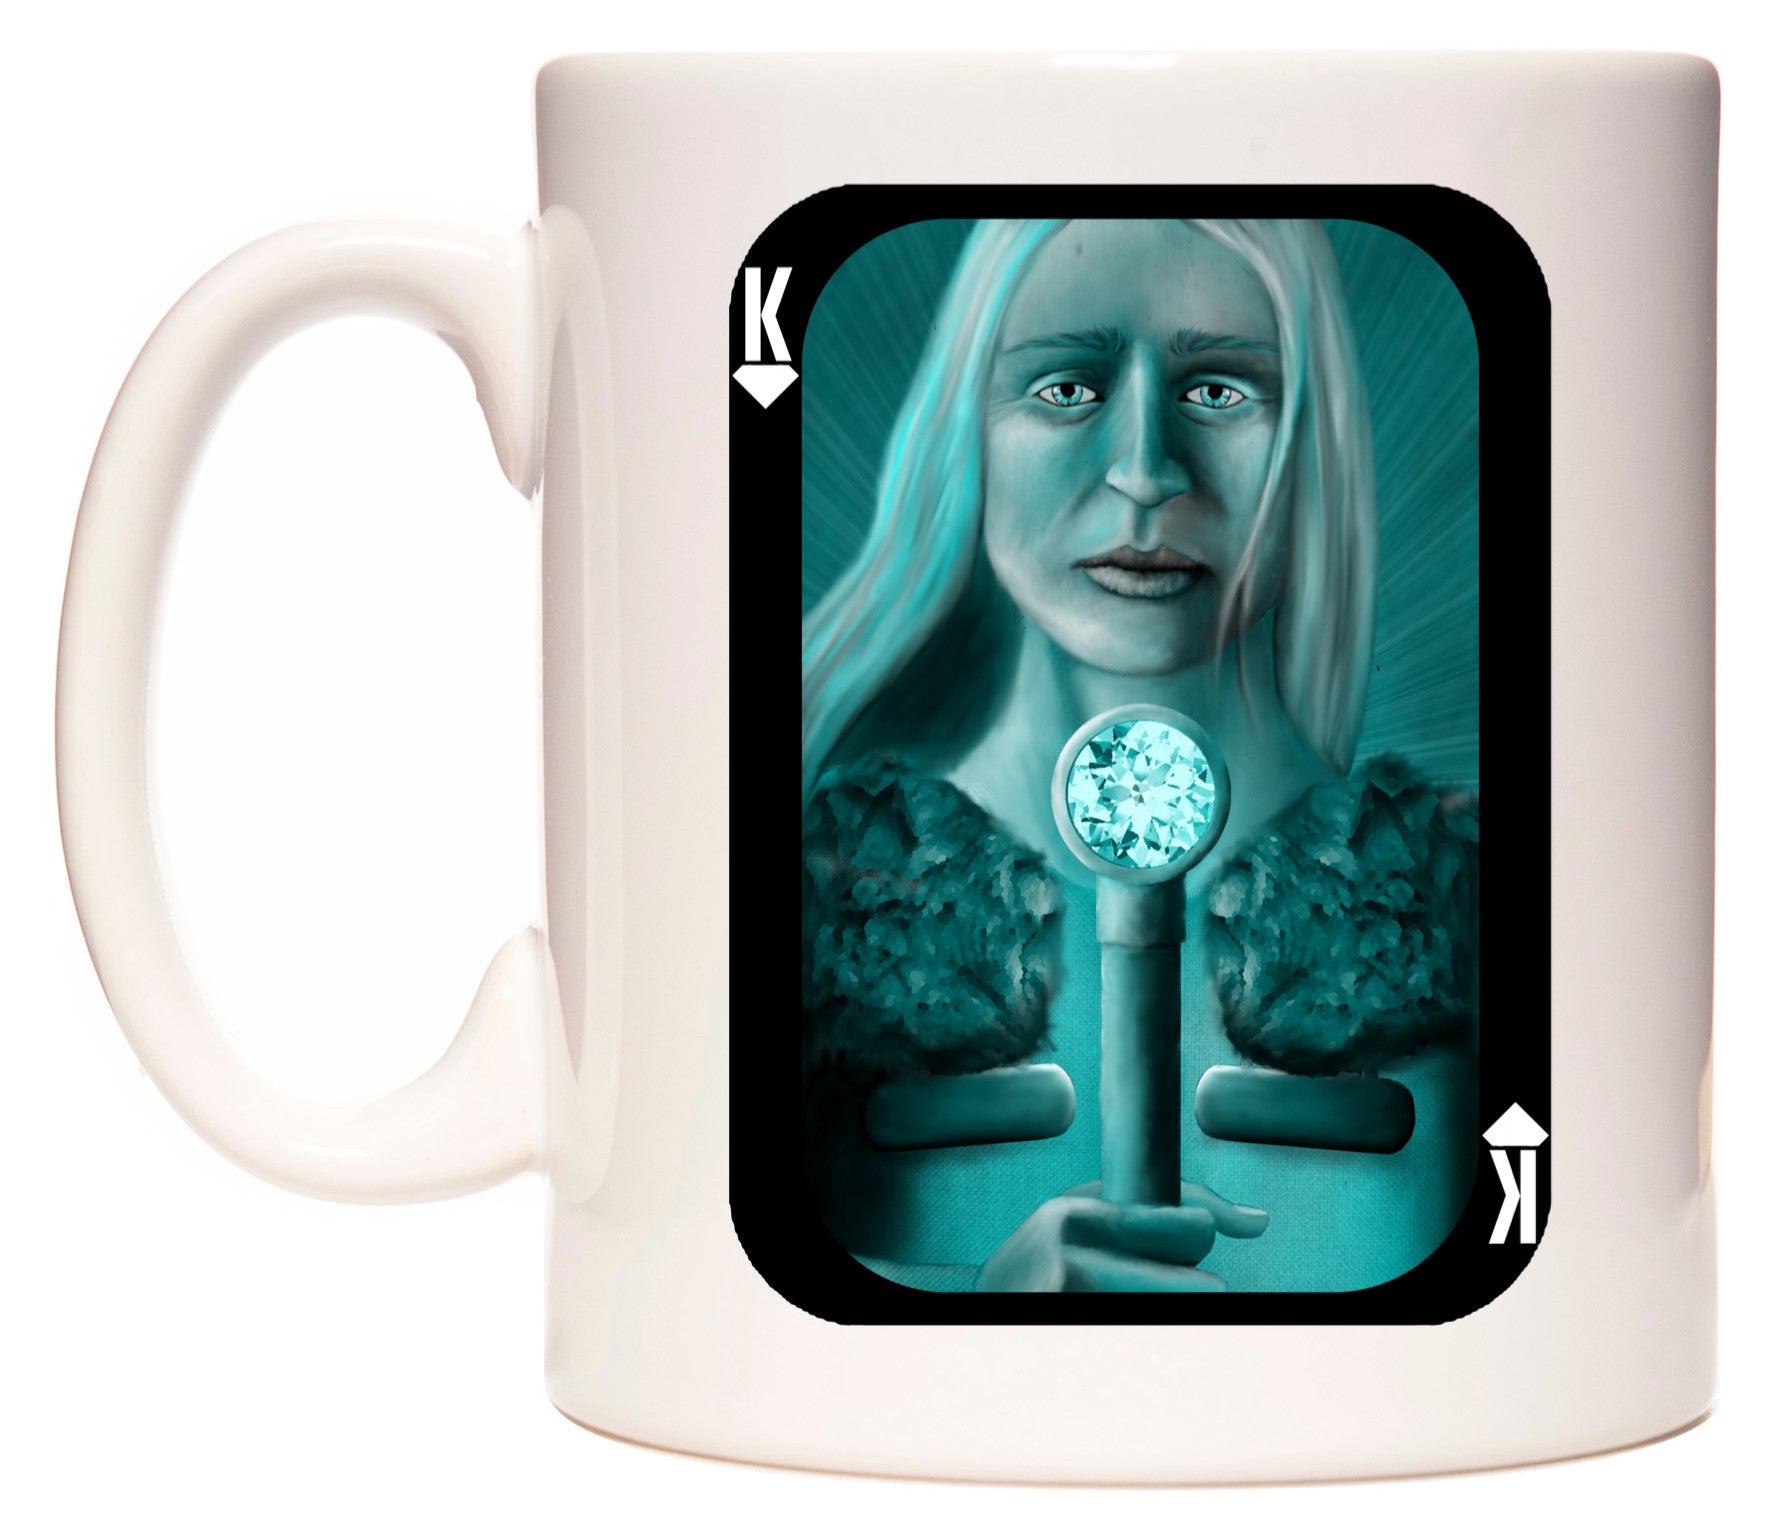 This mug features King of Diamond